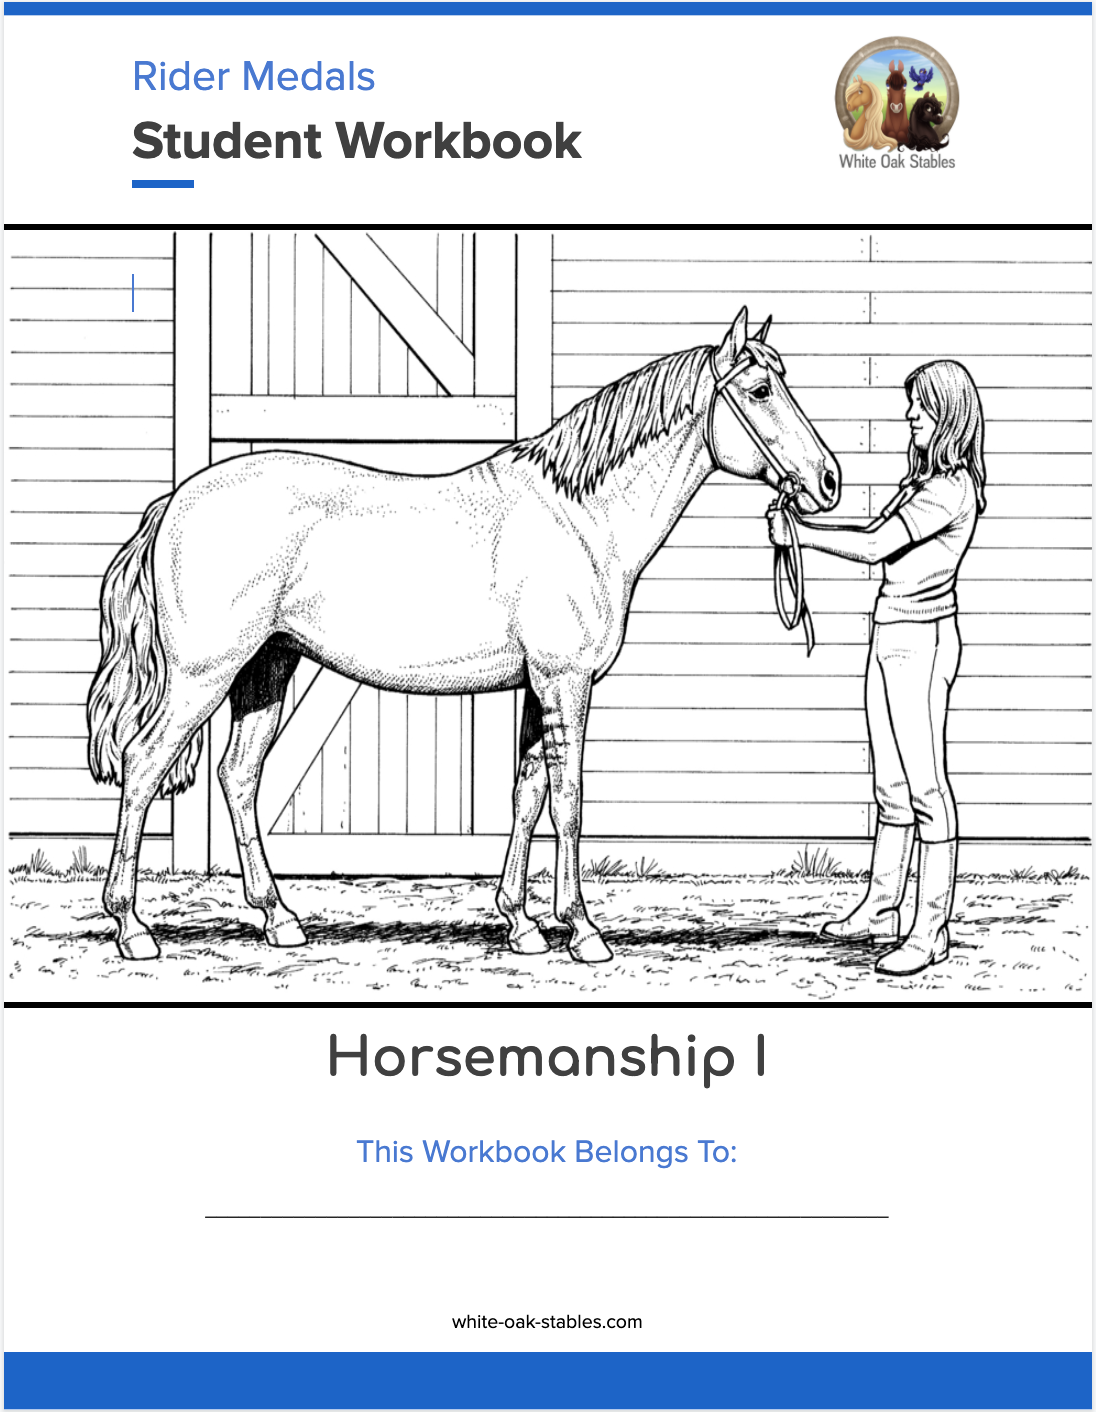 Student Workbook – Horsemanship I